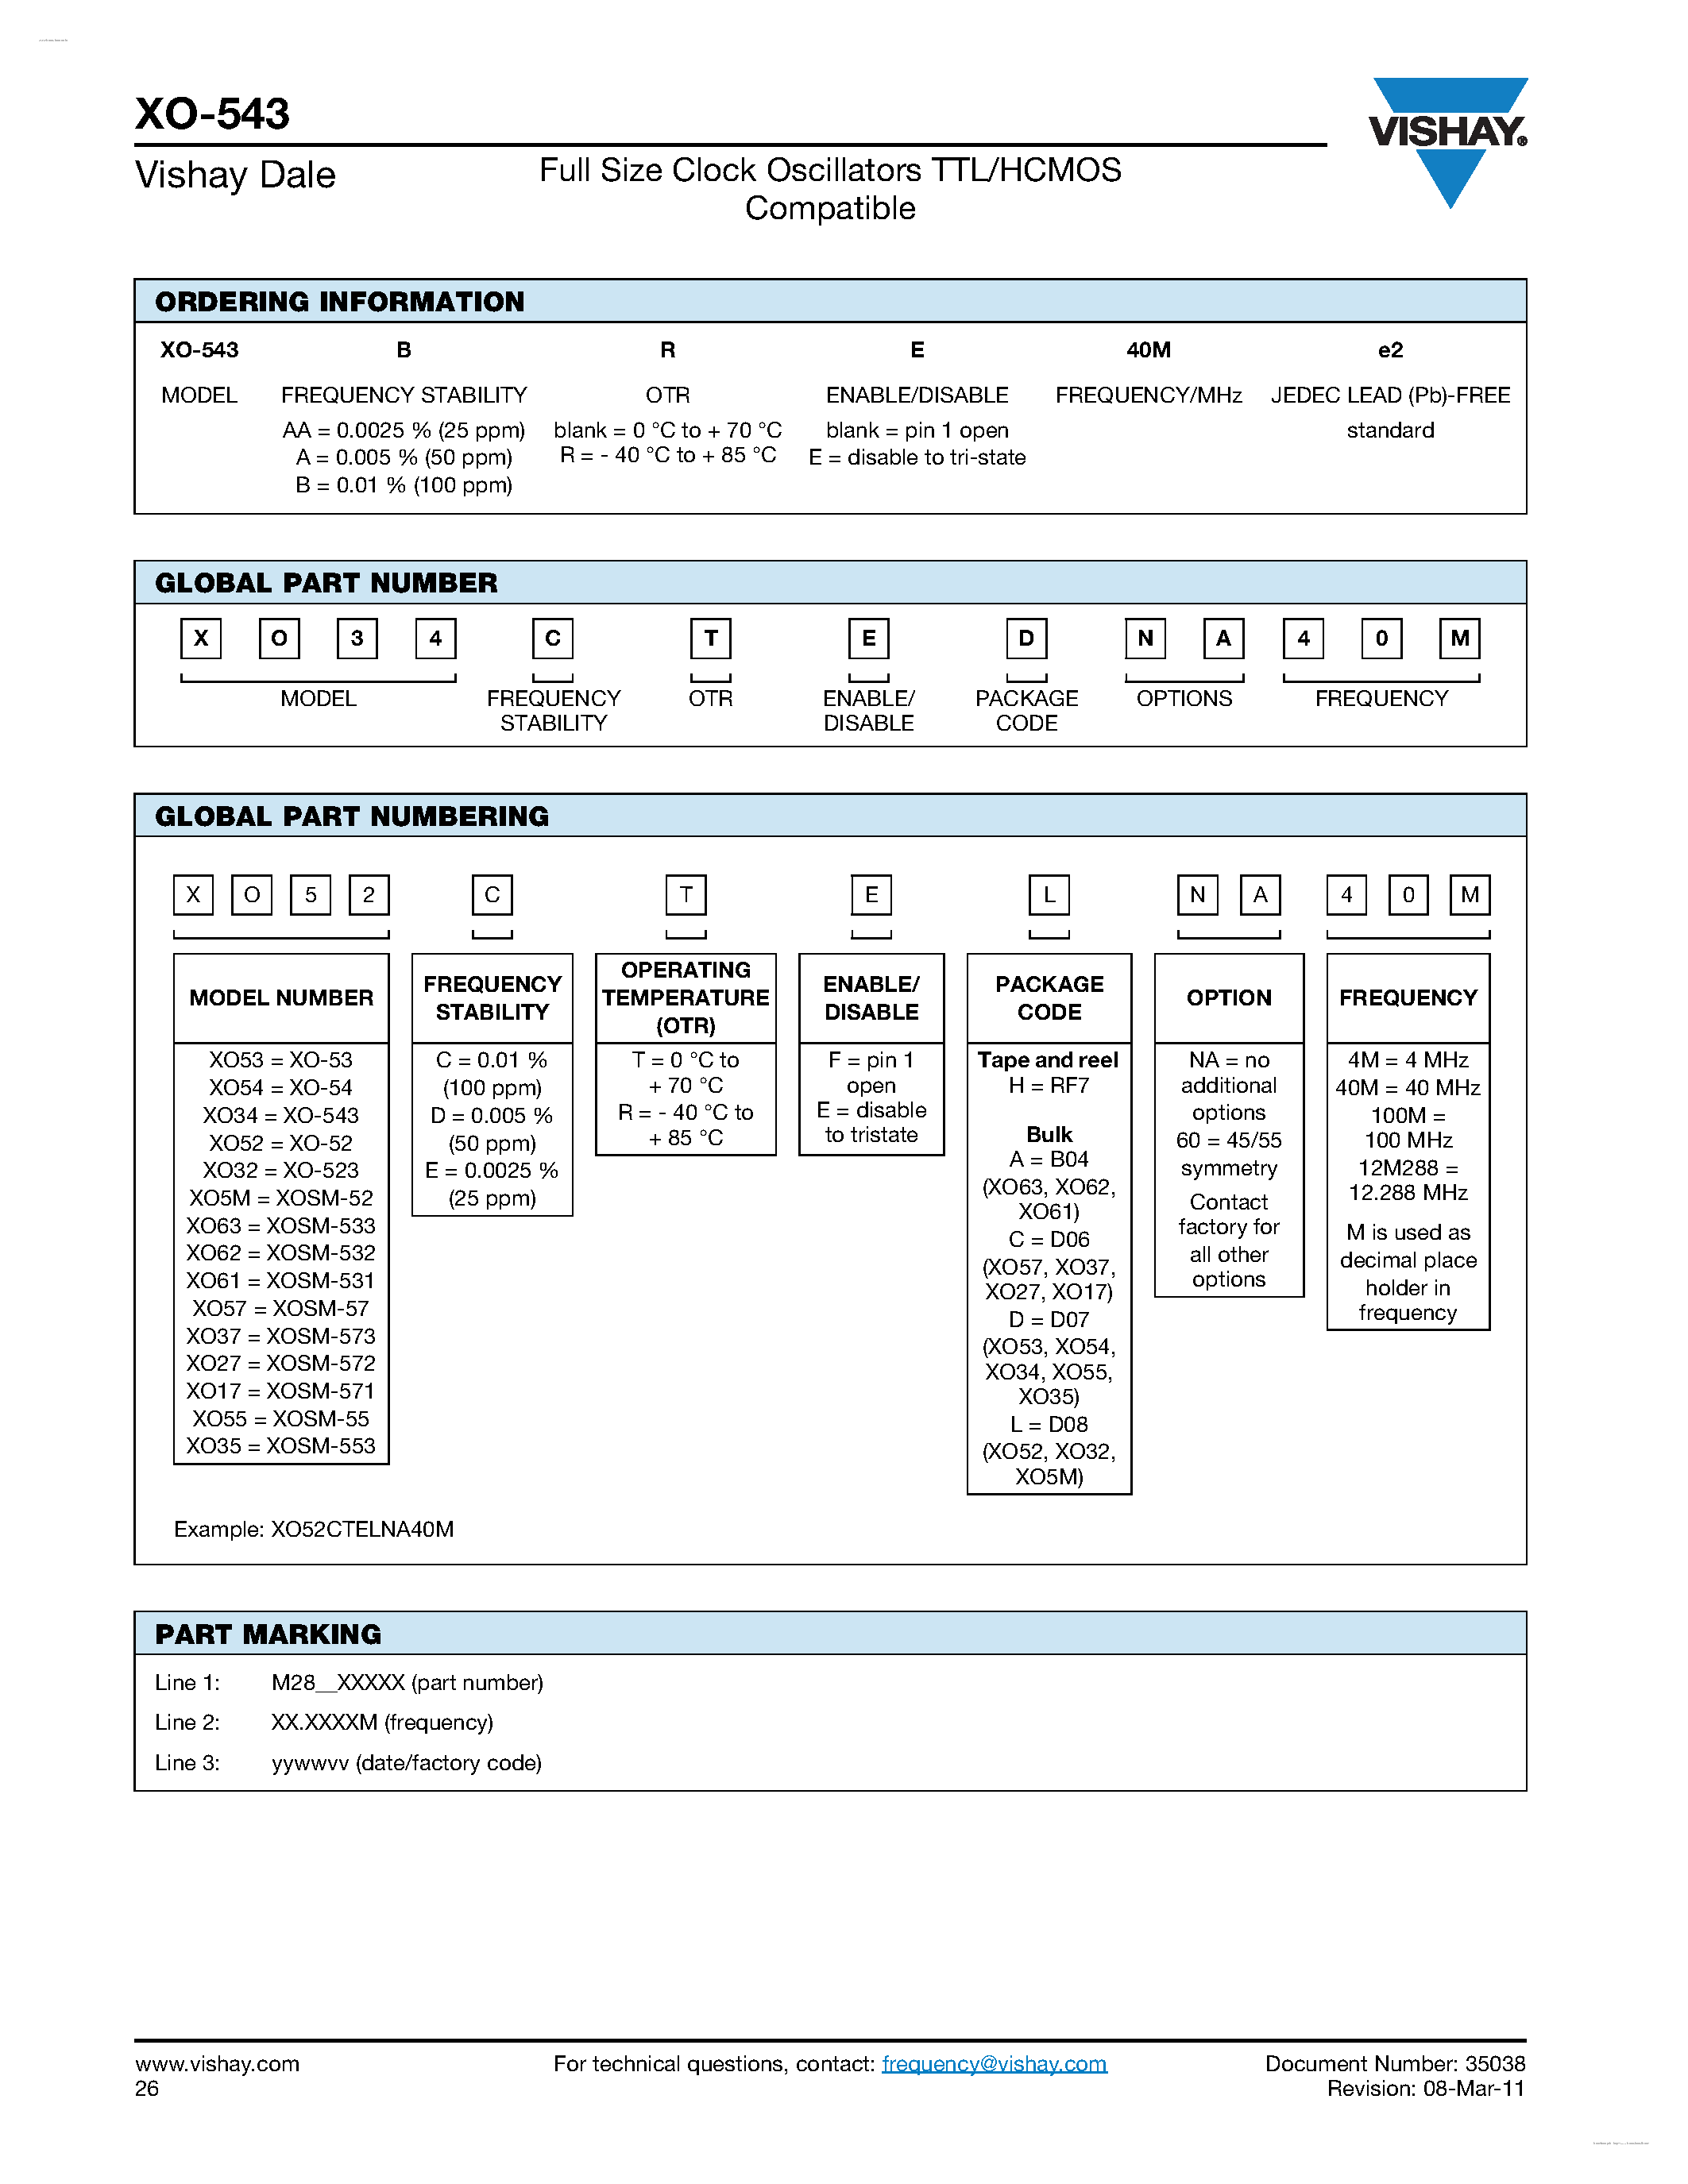 Datasheet XO-543 - Full Size Clock Oscillators TTL/HCMOS Compatible page 2